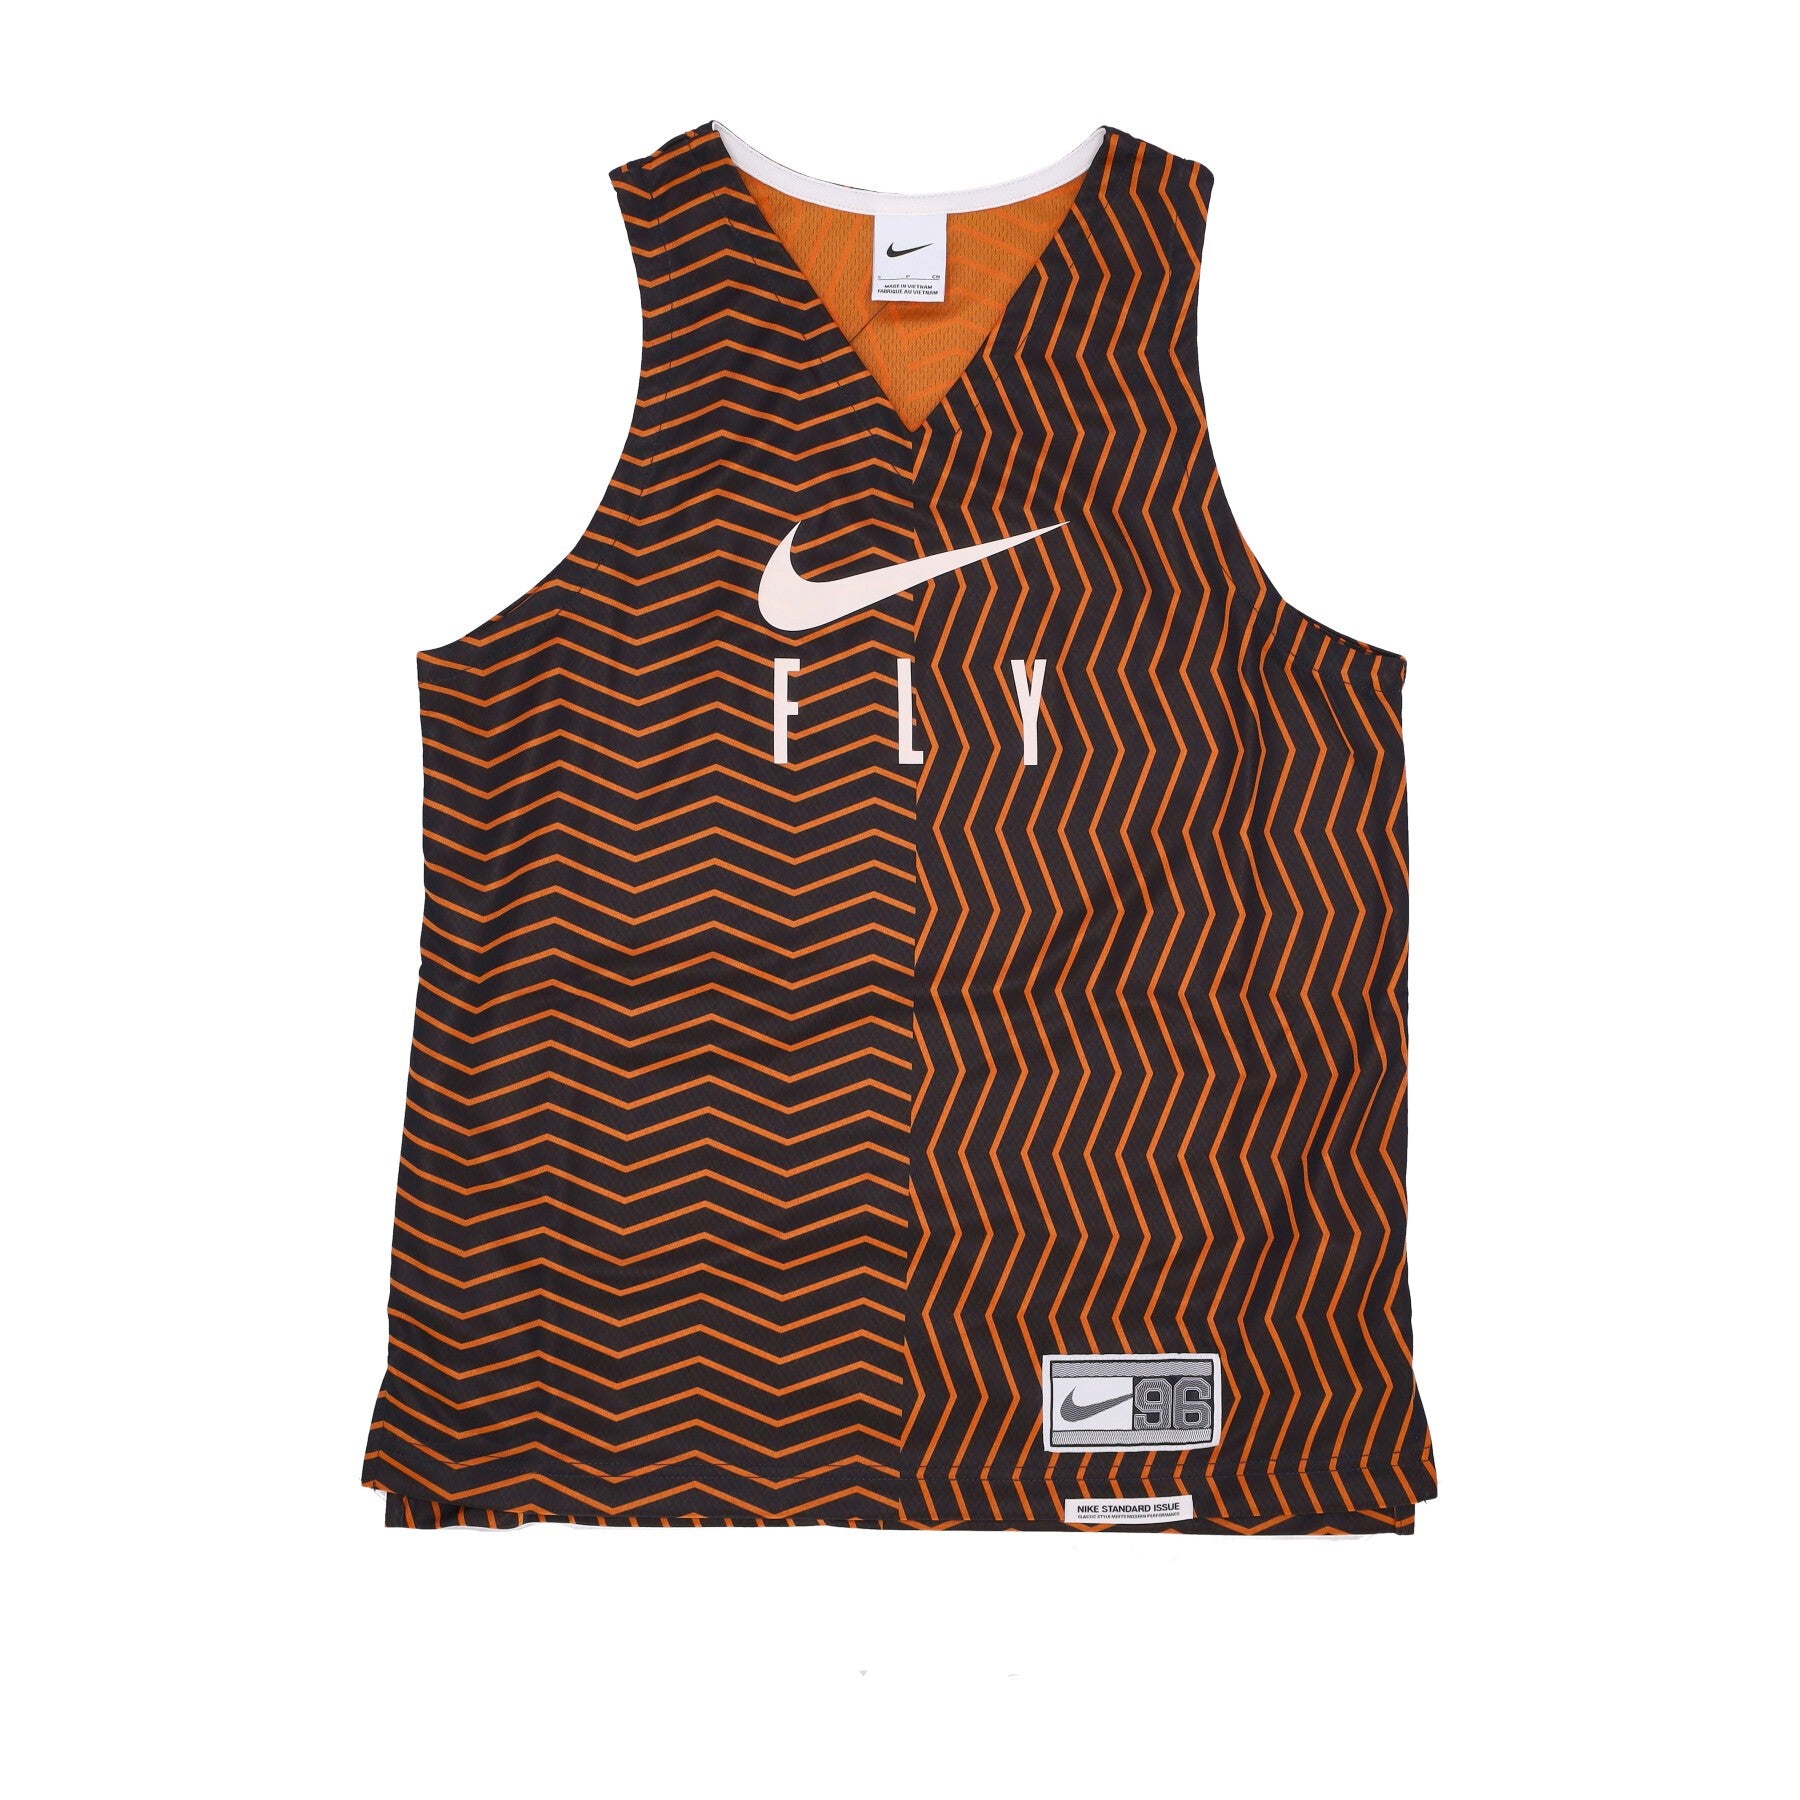 Nike, Canotta Tipo Basket Donna Standard Issue Basketball Jersey, Monarch/black/sail